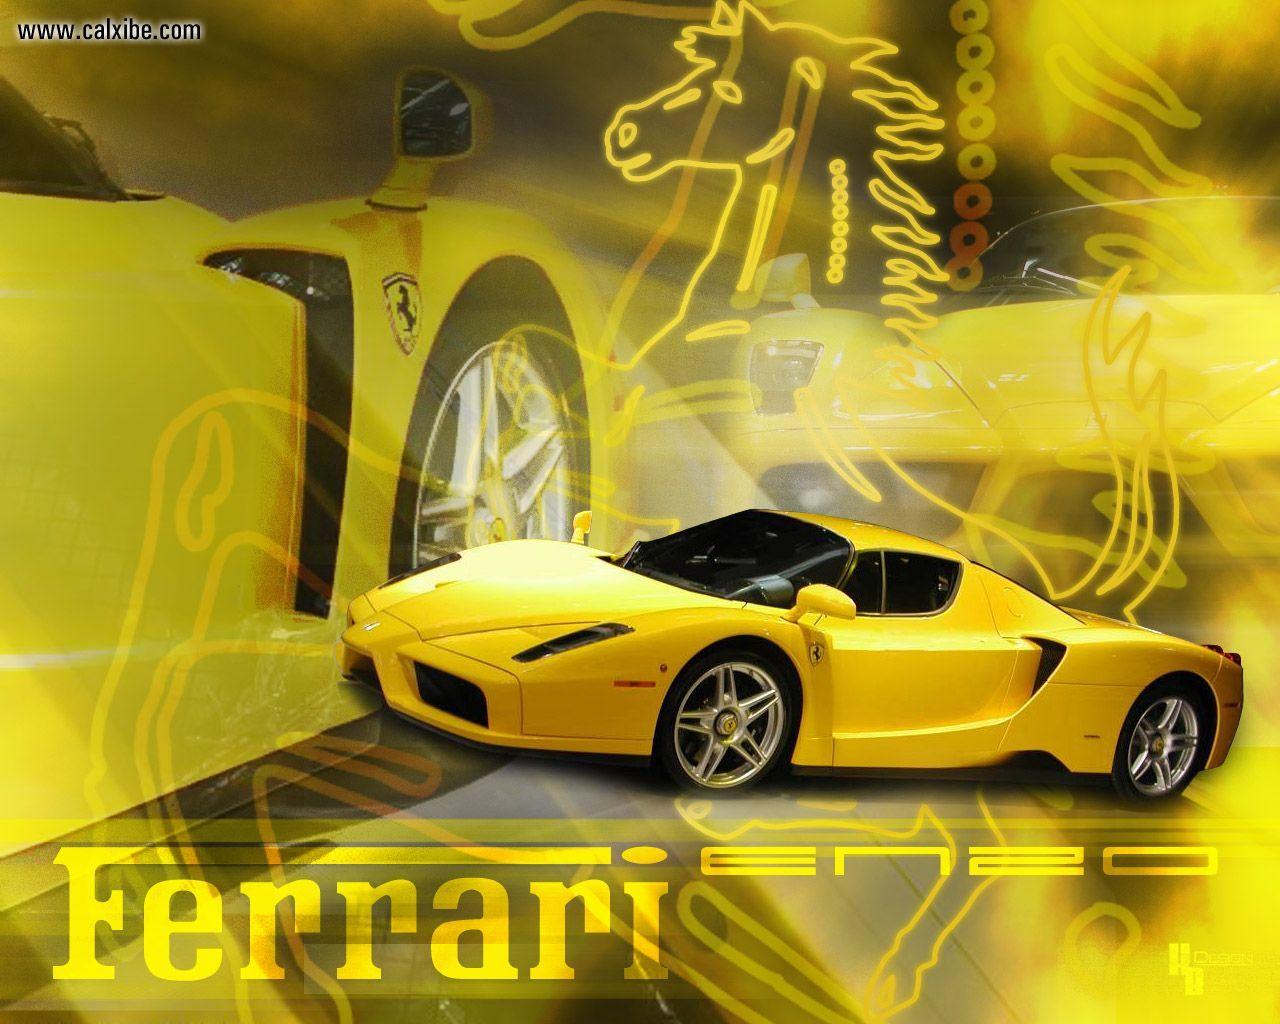 Cars: Ferrari Enzo, picture nr. 10598